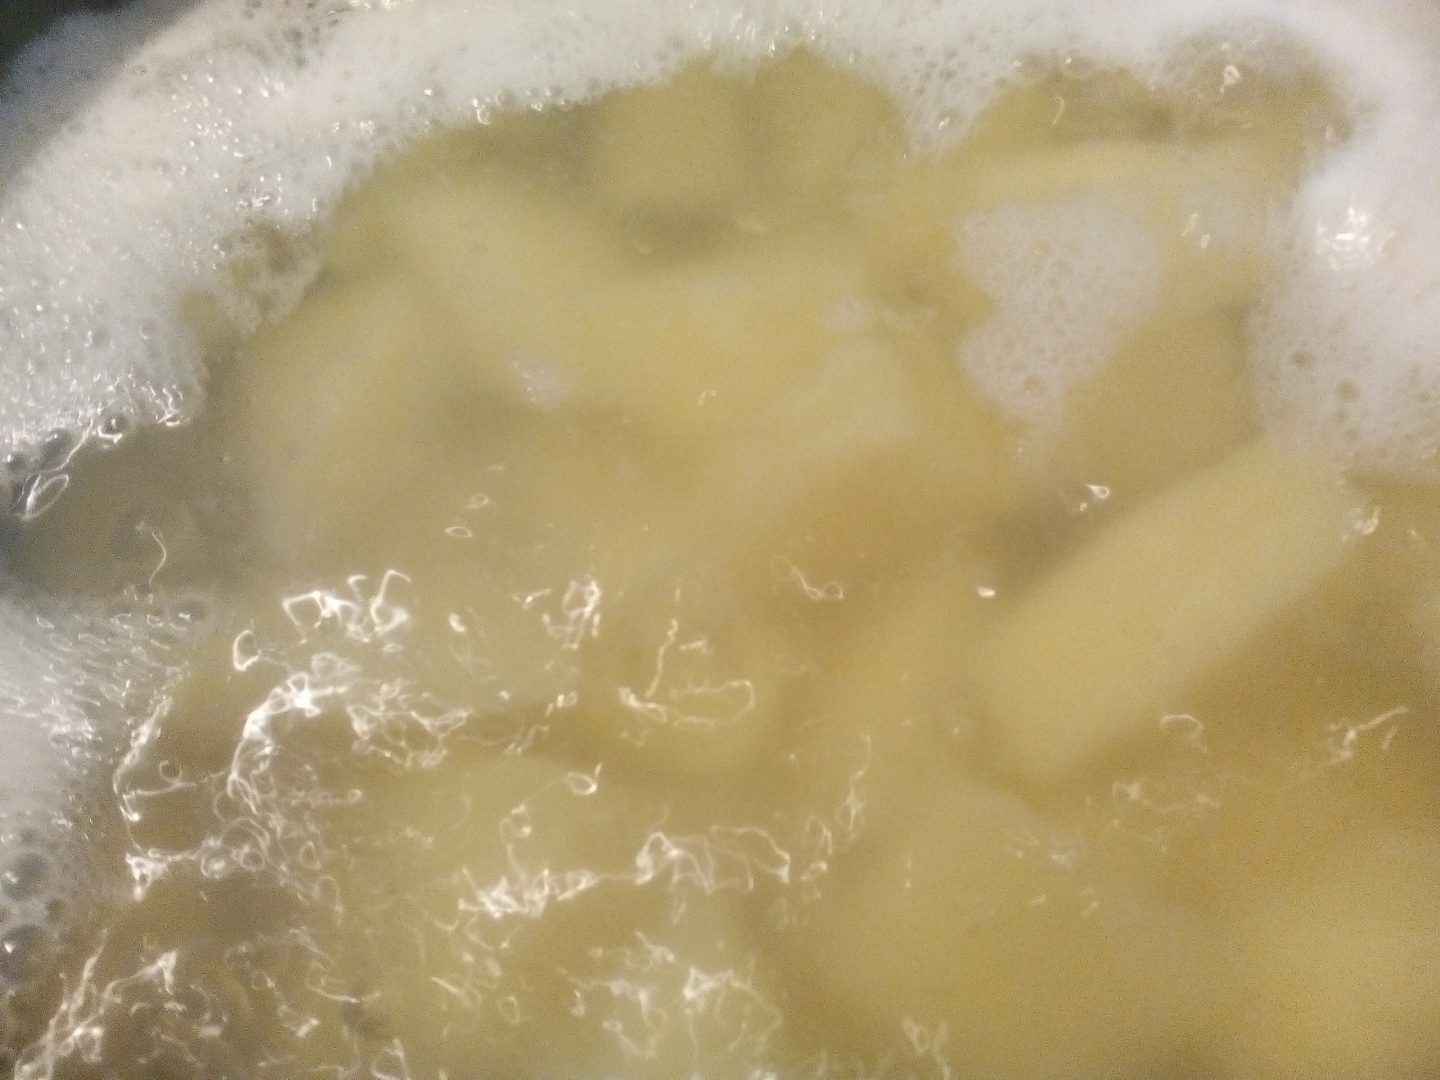 Parjolute moldovenesti in sos, cu garnitura de piure de cartofi